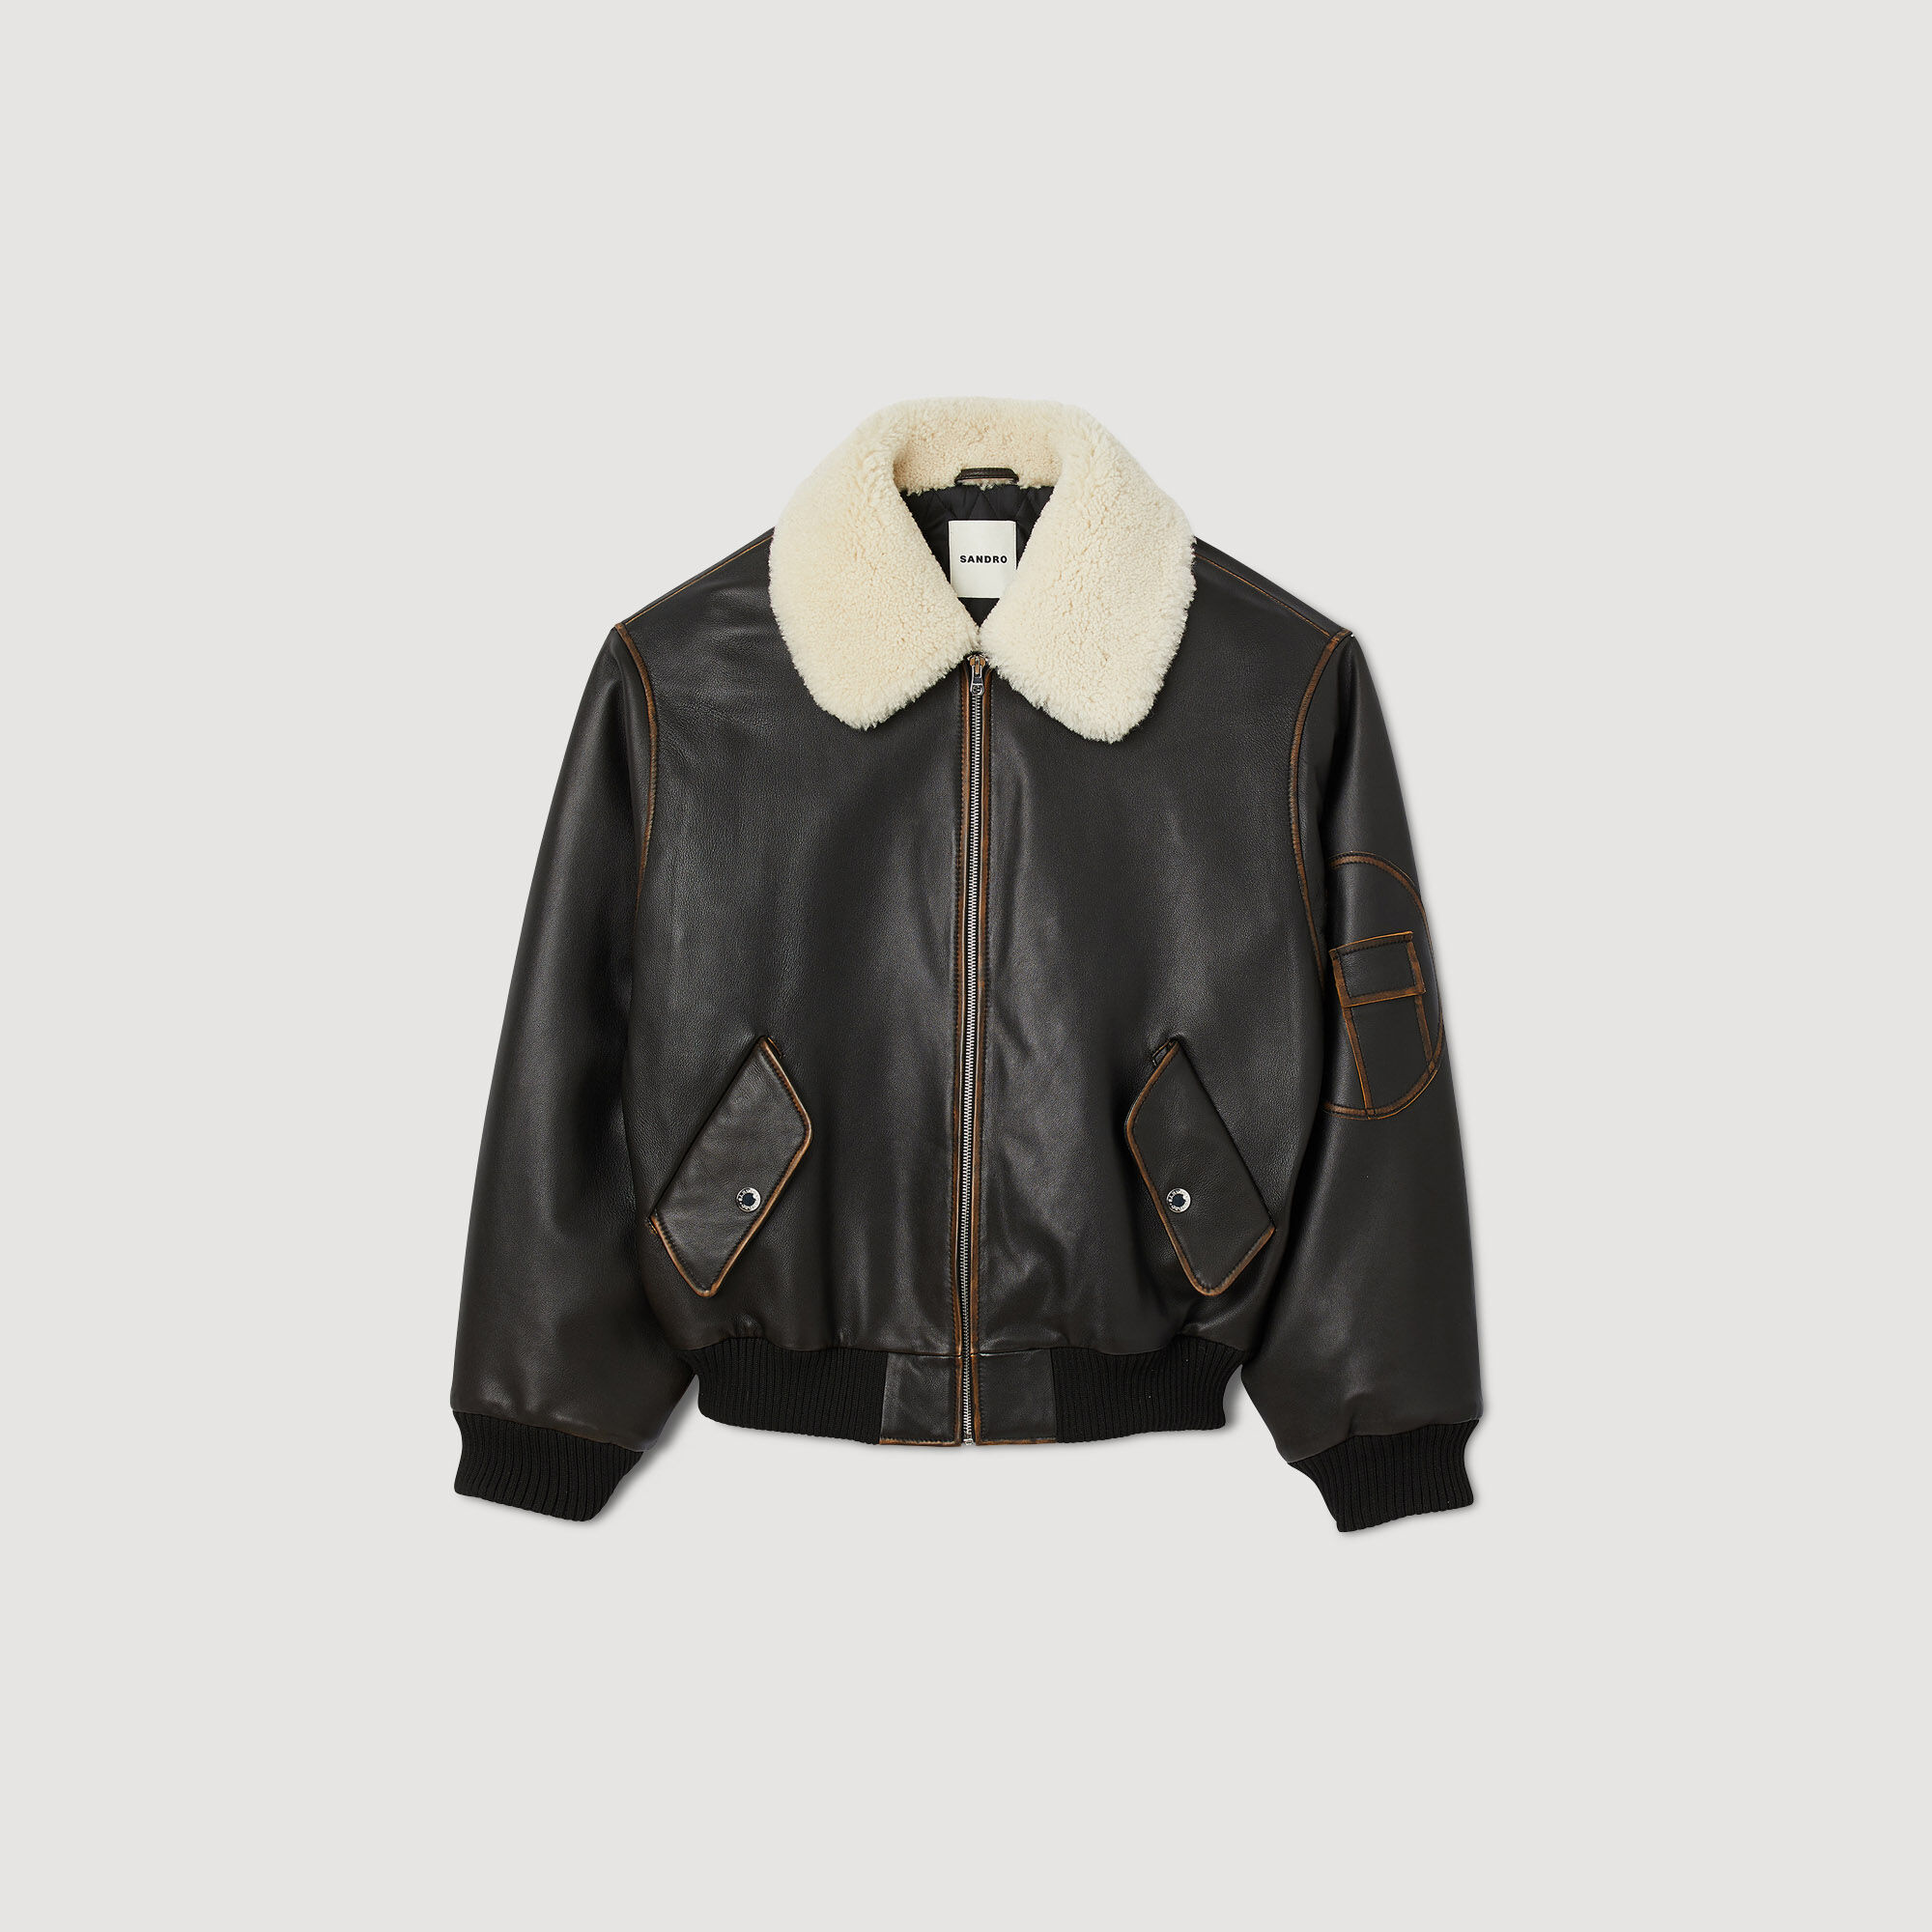 Buy Bareskin Black Colour Genuine Leather Bomber Jacket for Men/Designer Leather  Jacket for Men/Branded Leather Jacket for Men/Stylish Leather Jacket for  Men at Amazon.in